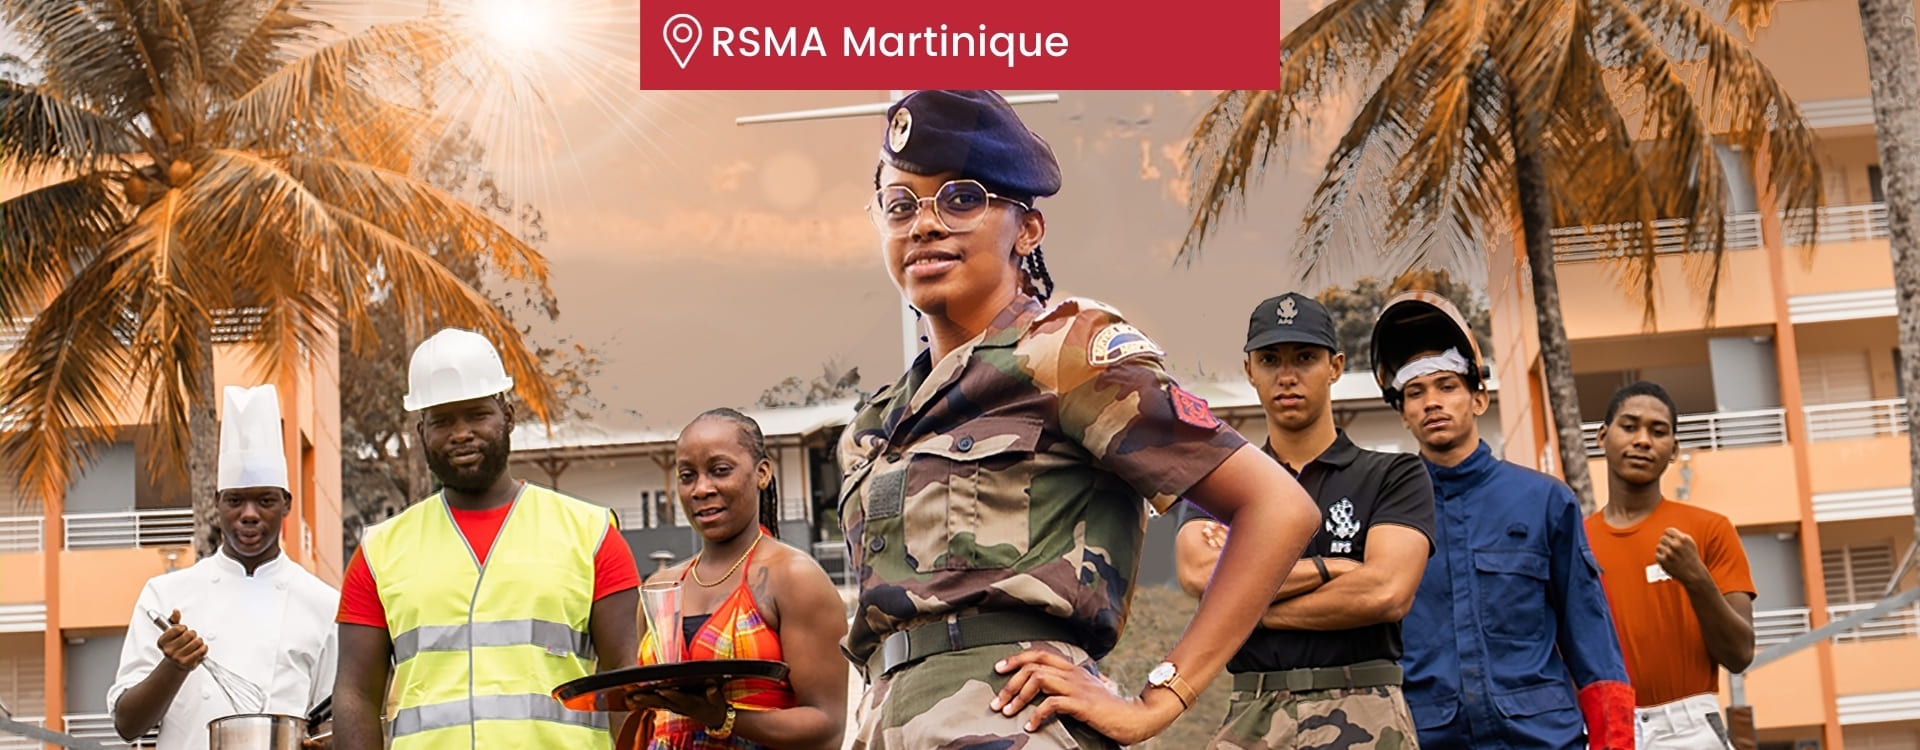 RSMA Martinique